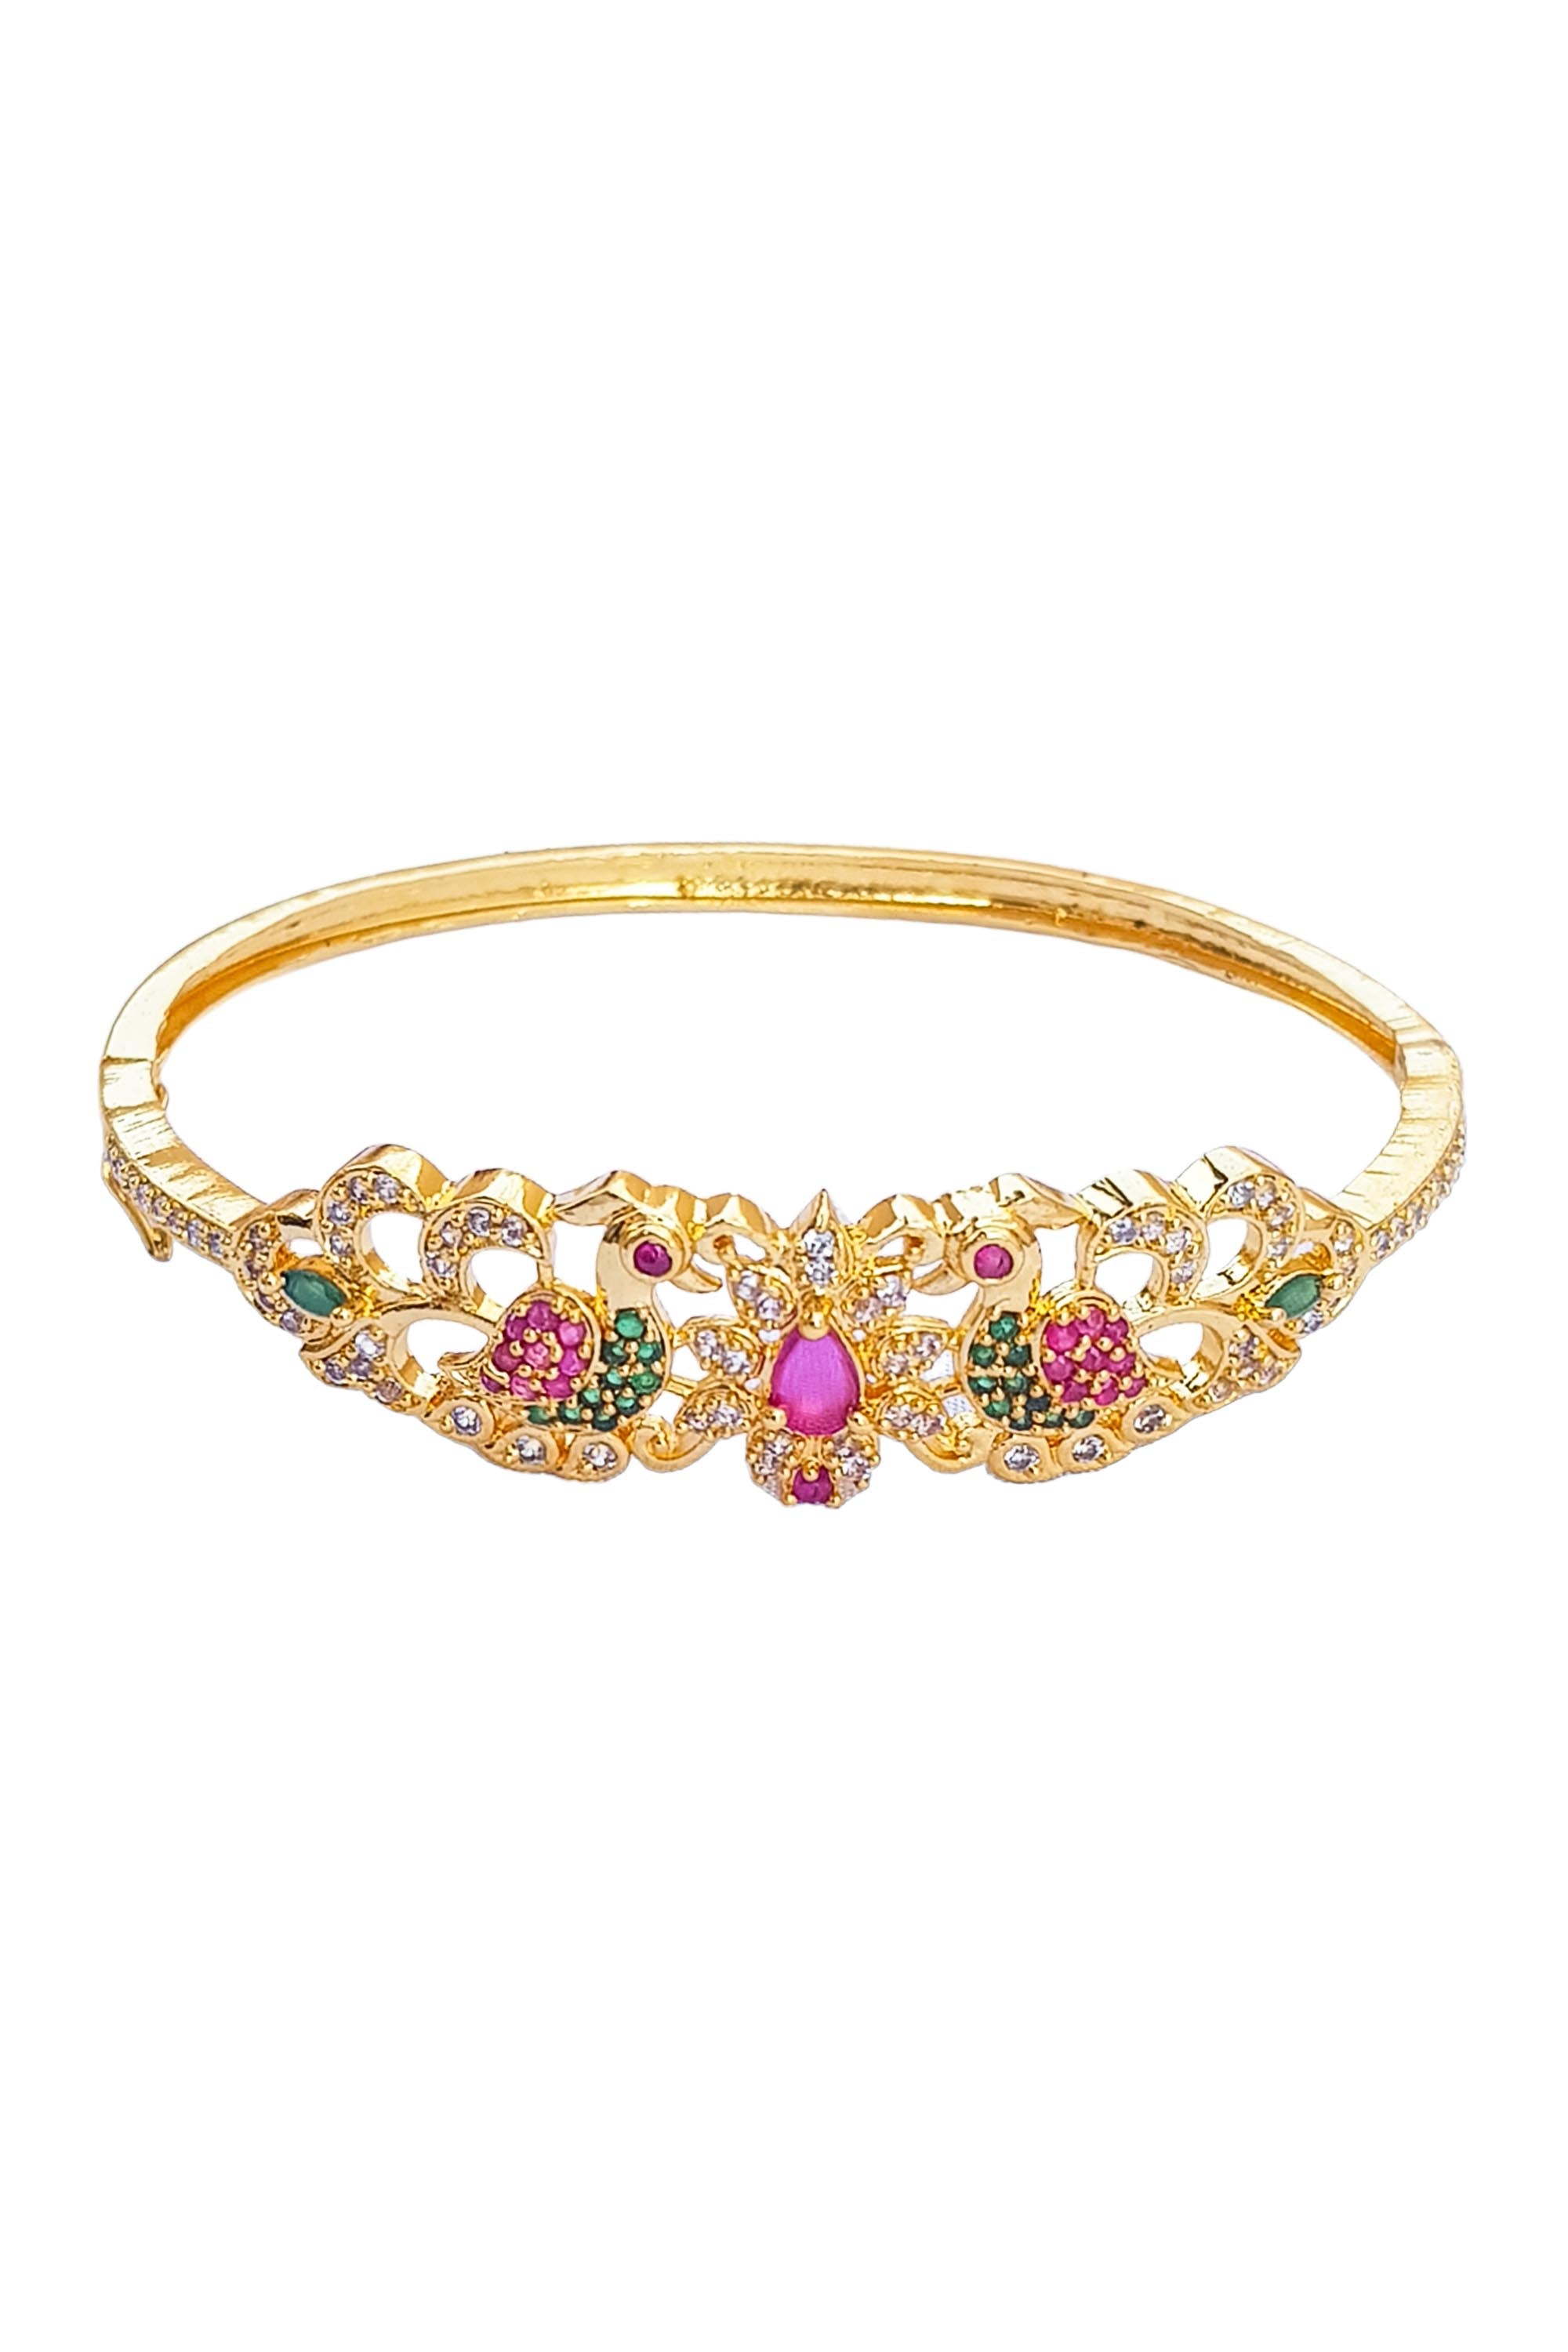 Swarovski Crystal Luna Multicolored Rose Gold-Tone Plated Bangle Bracelet |  REEDS Jewelers